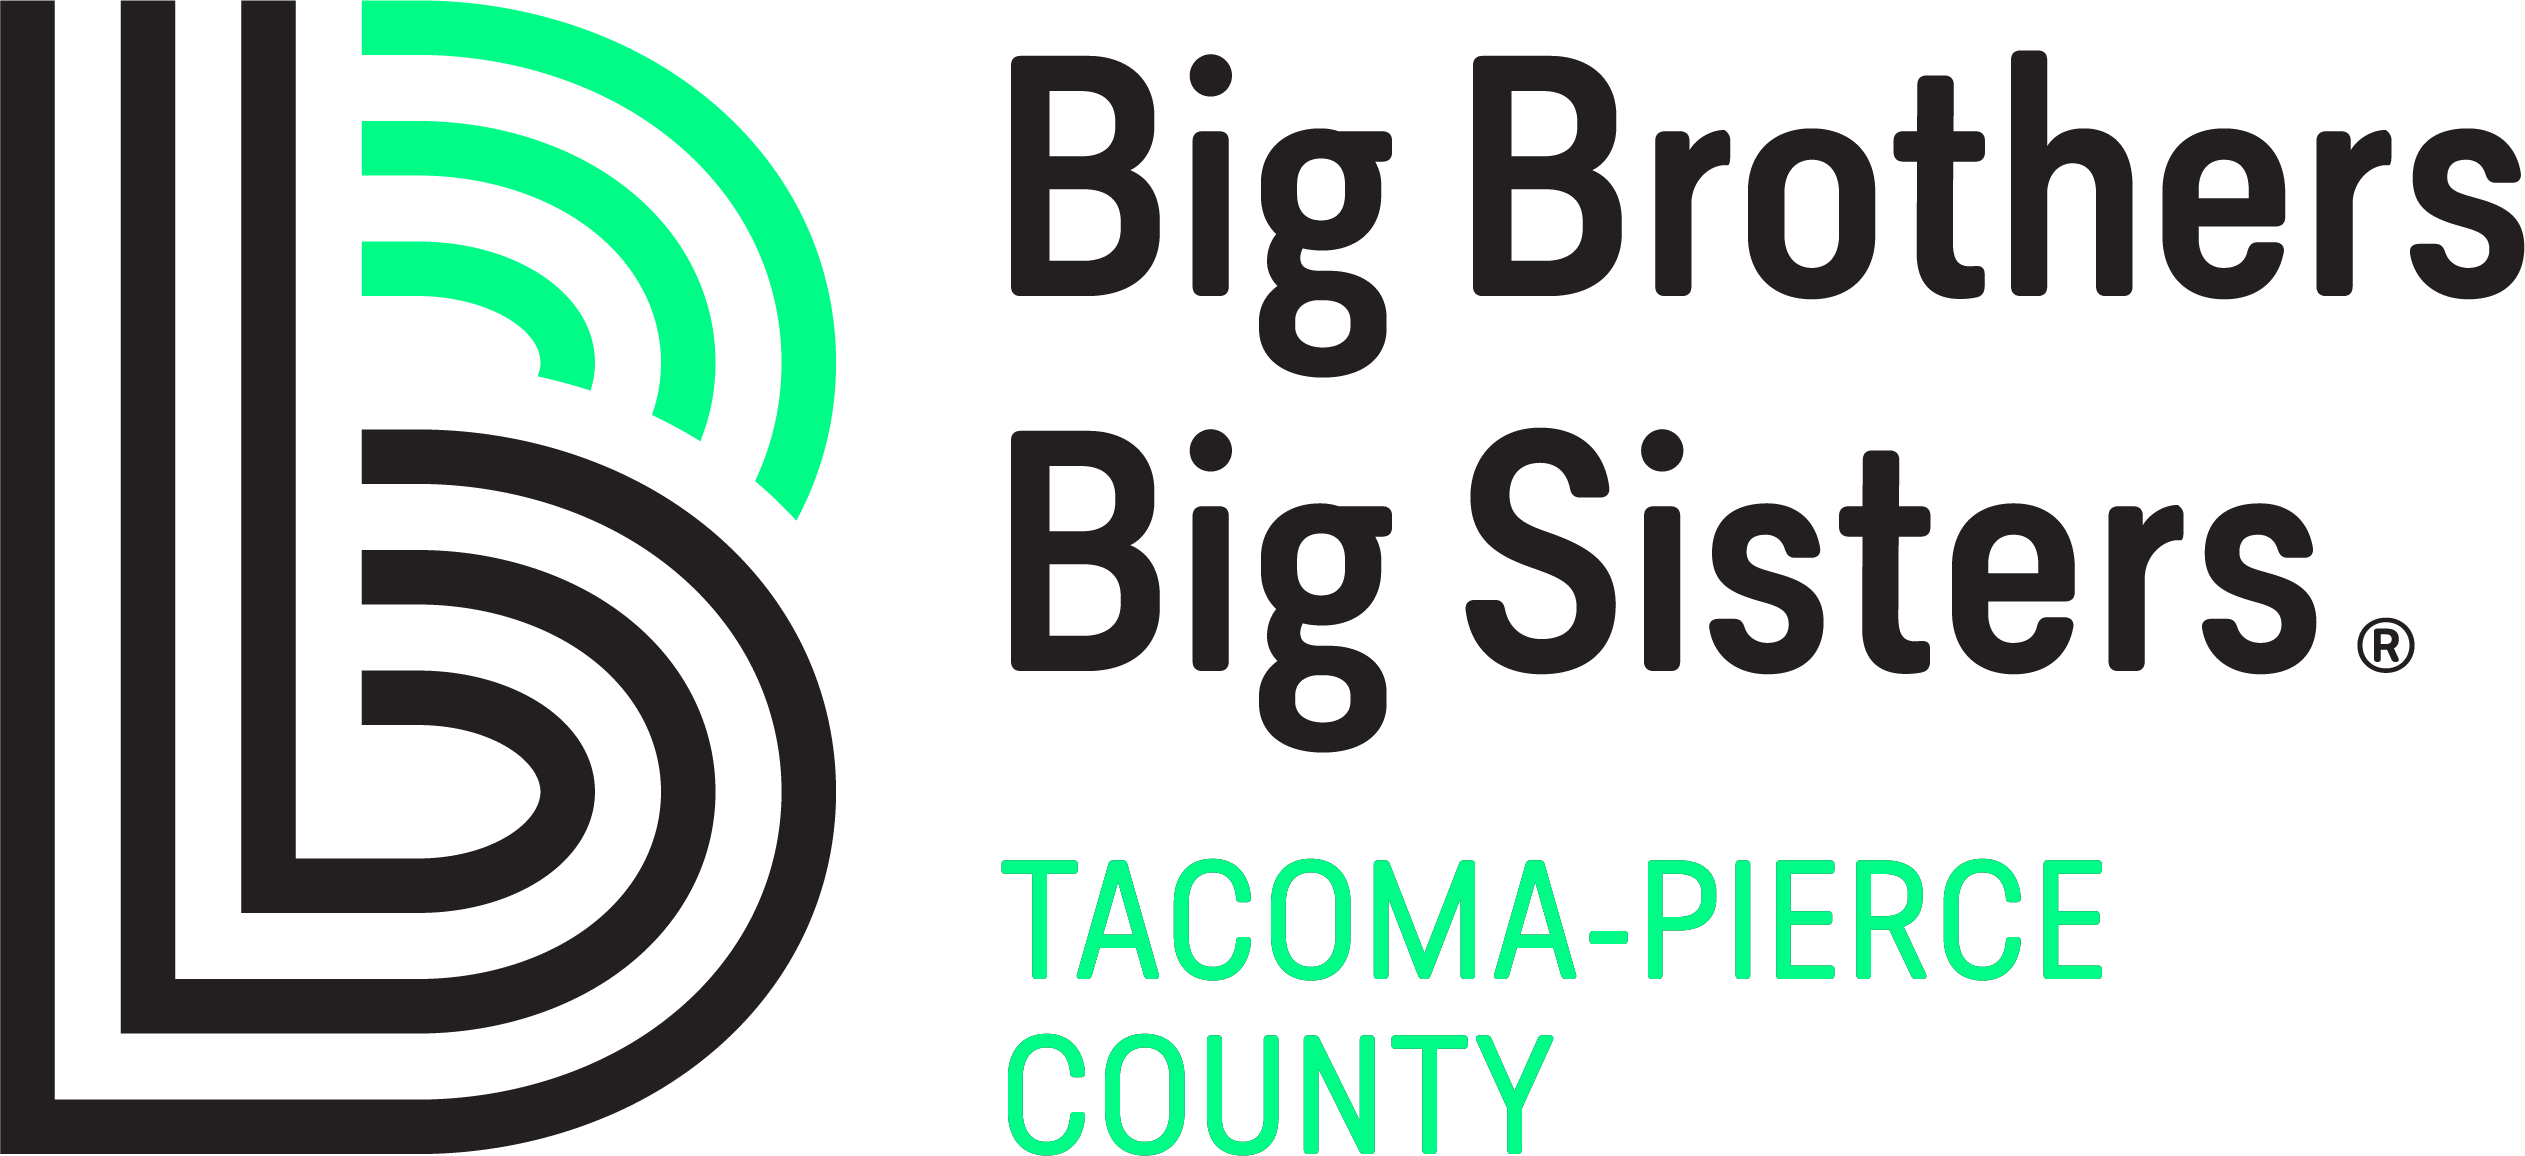 Big Brothers Big Sisters of Puget Sound Logo